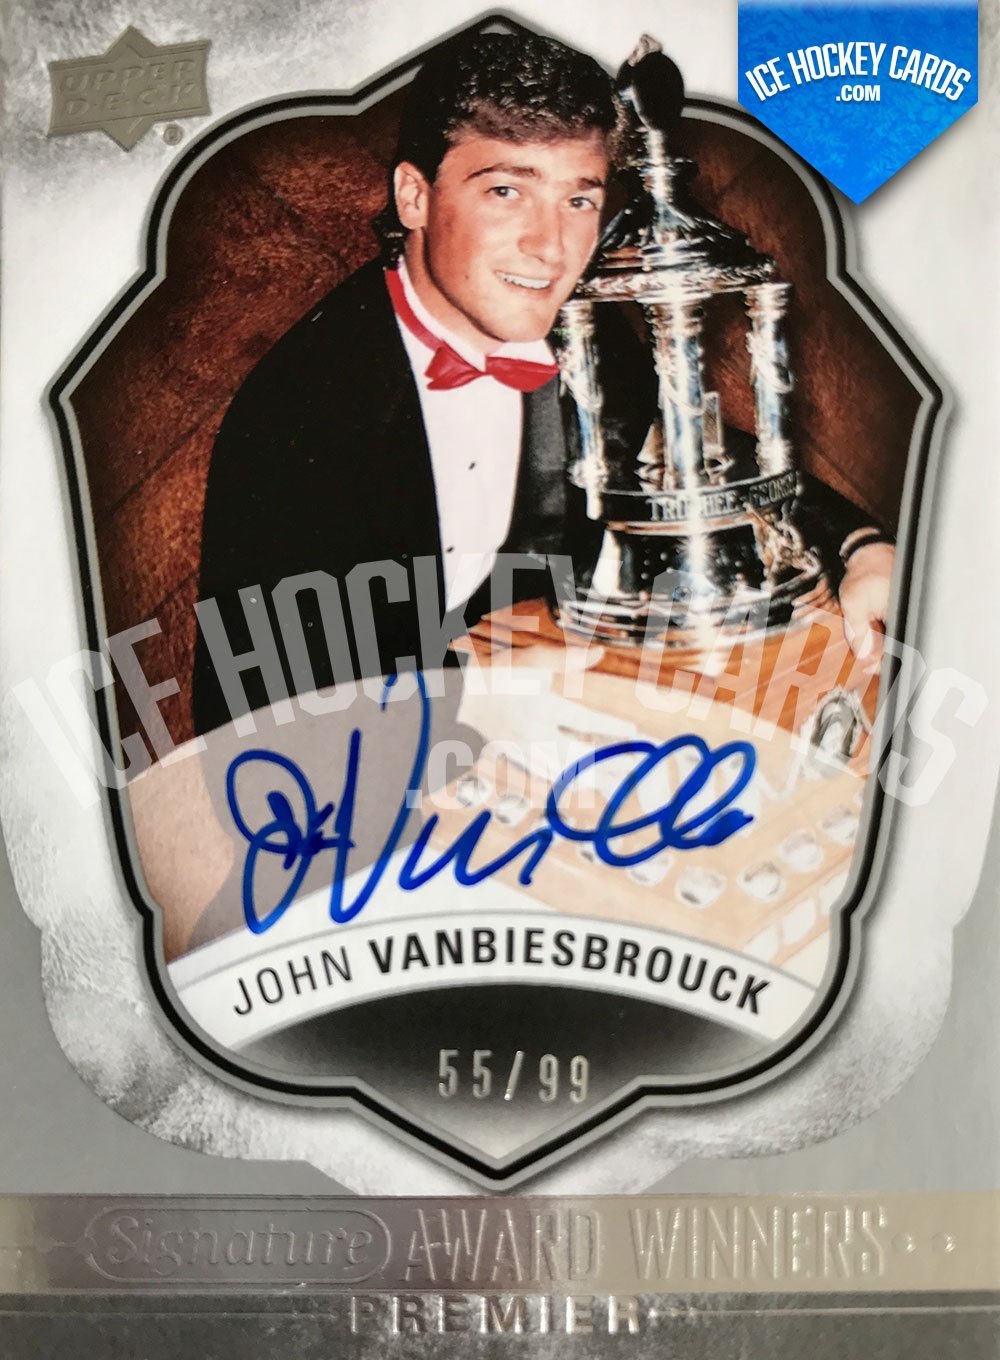 Upper Deck - Premier Hockey 2017-18 - John Vanbiesbrouck Signature Award Winners - Vezina Trophy 1985-86 New York Rangers